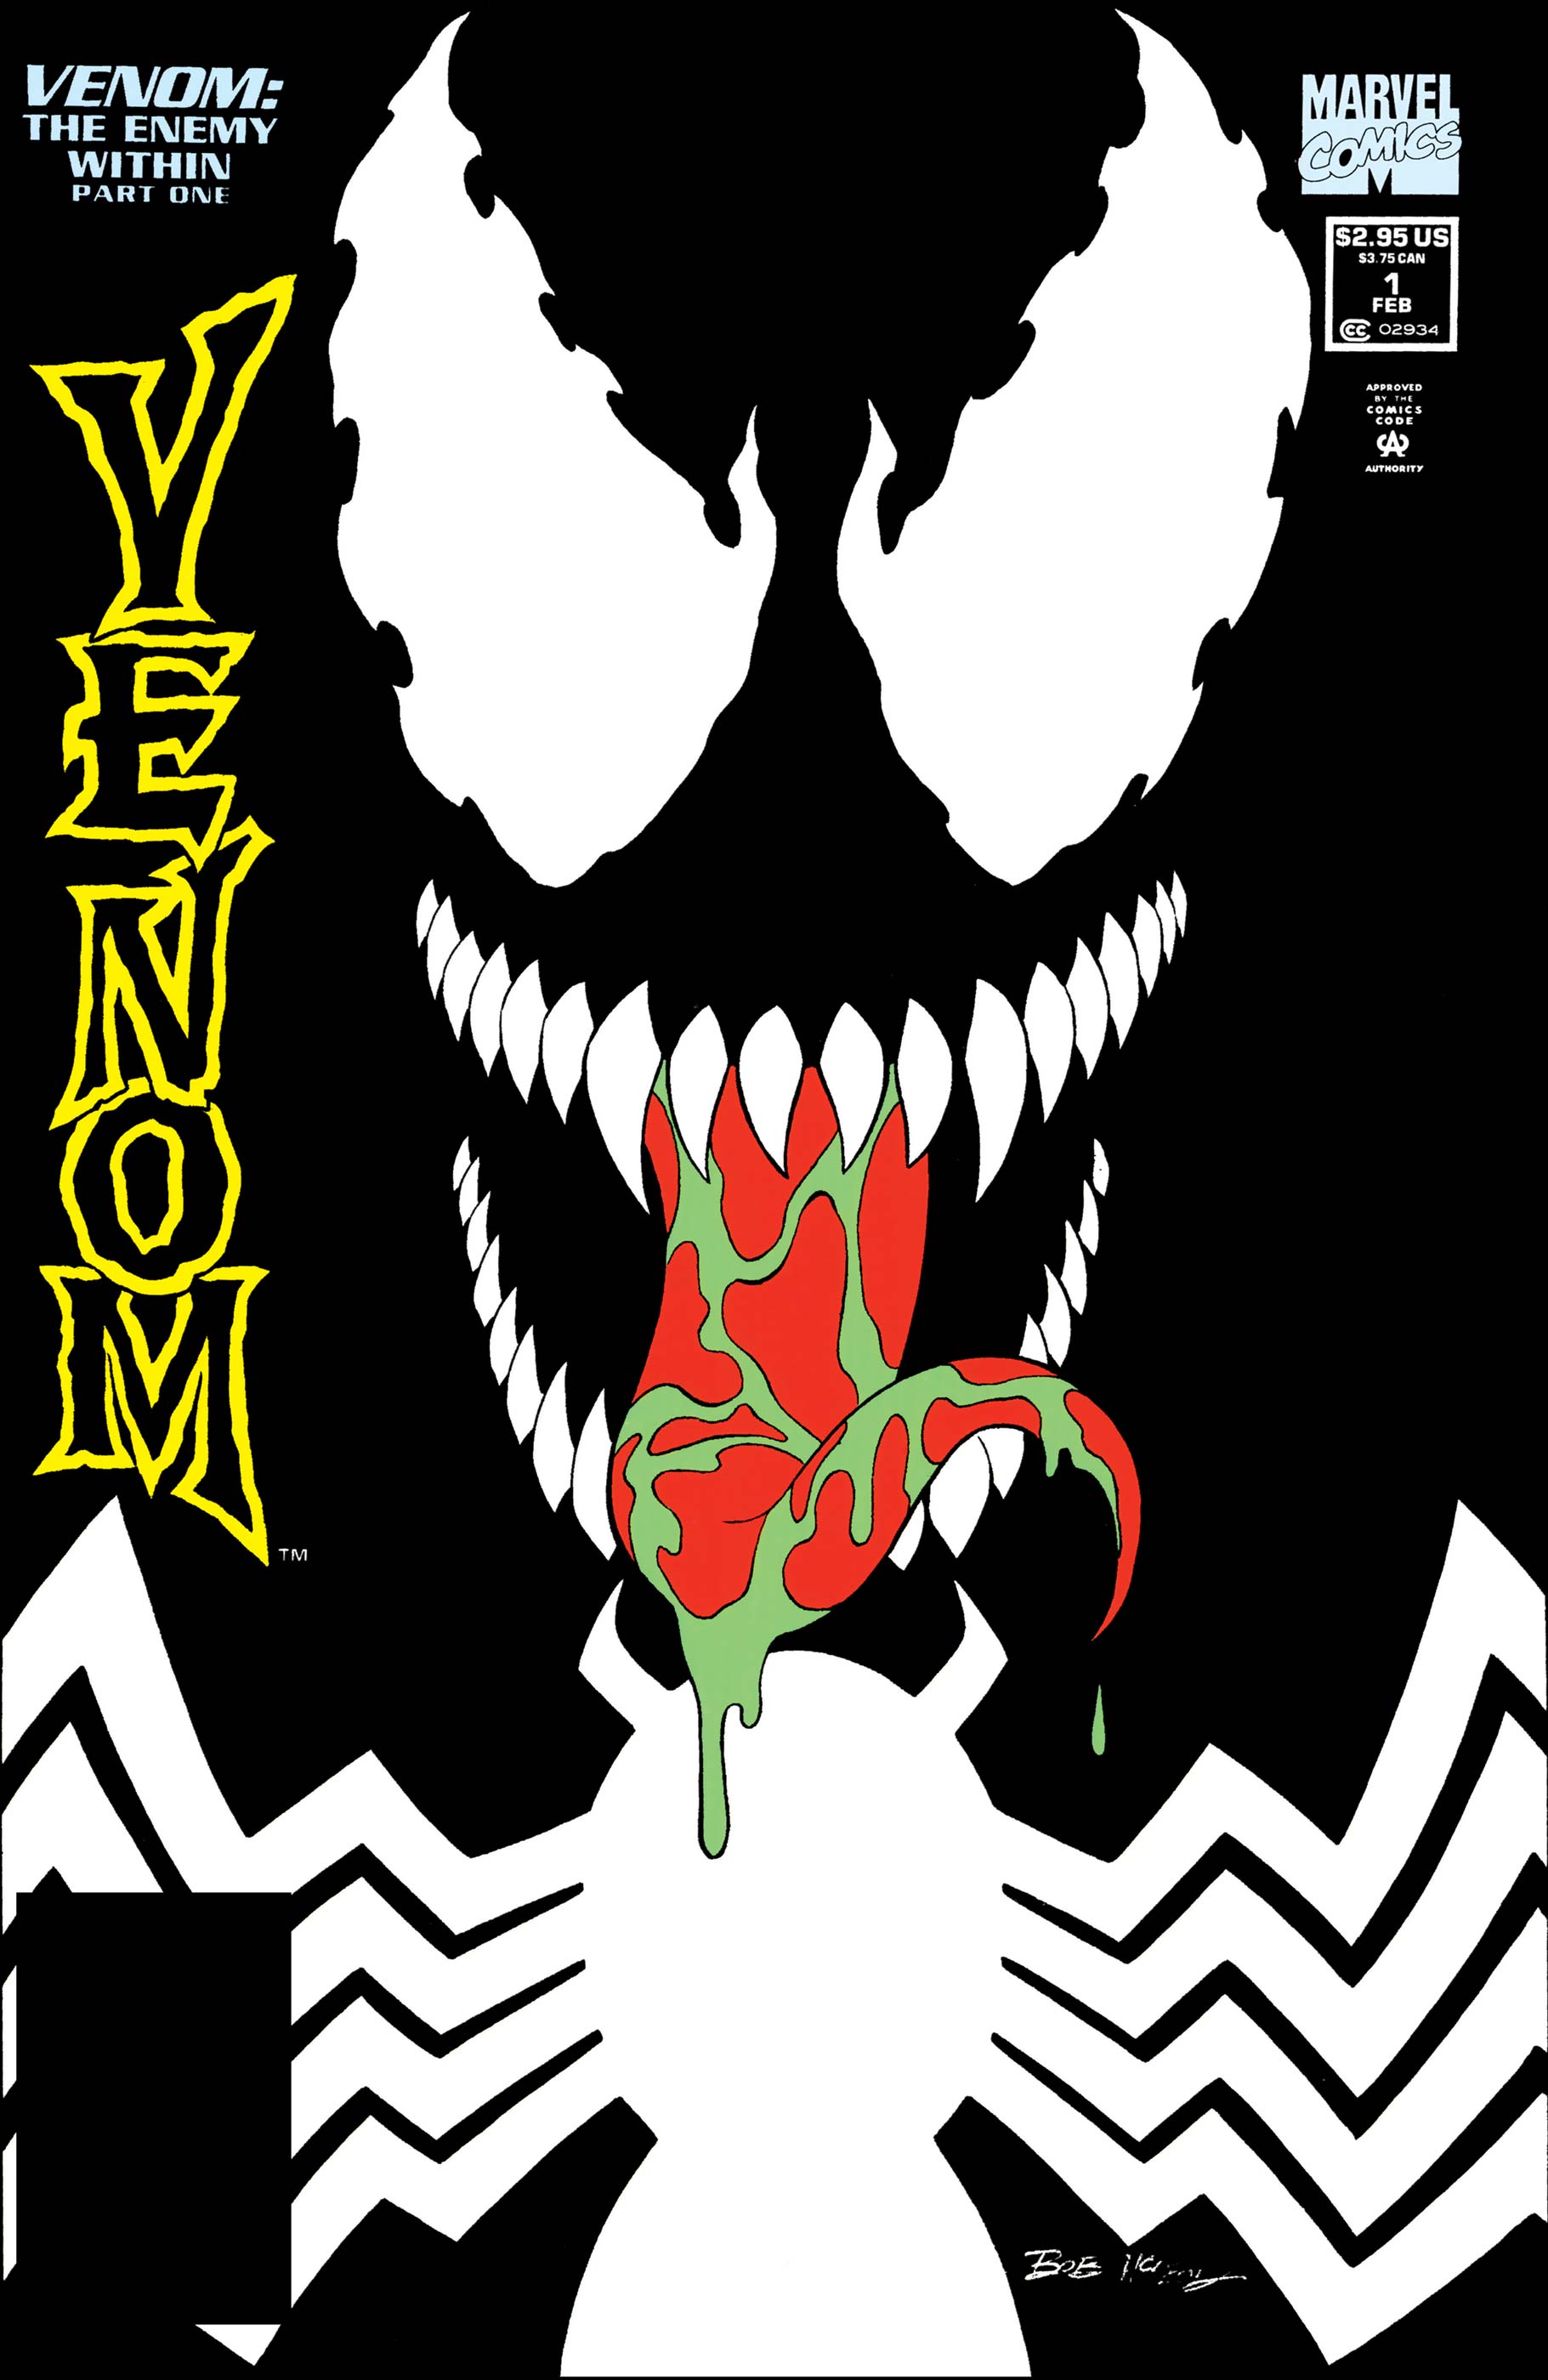 Venom the enemy within part 1